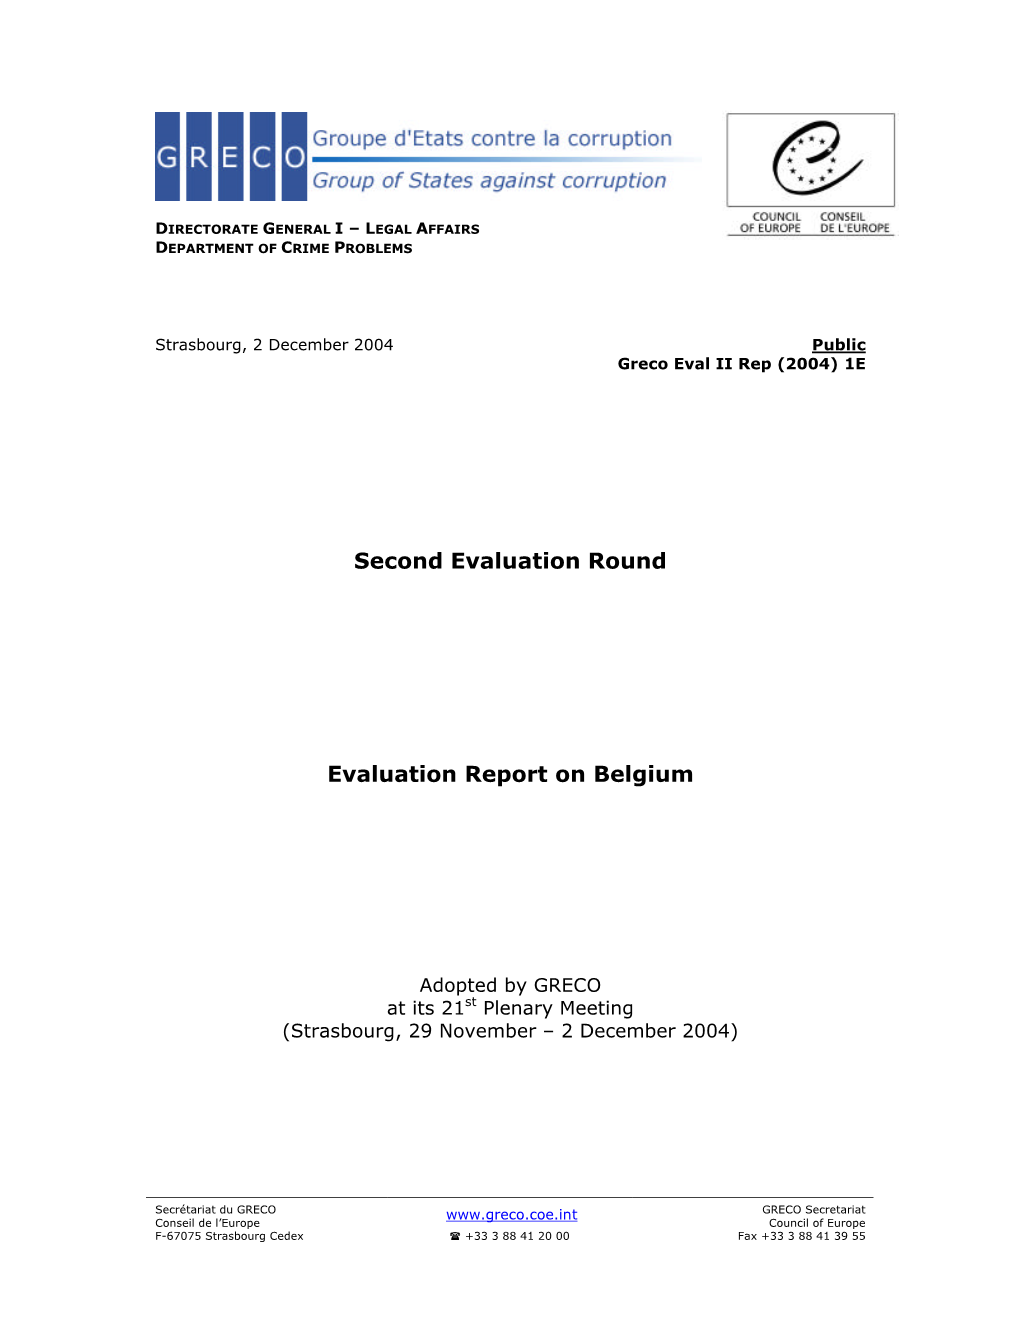 Second Evaluation Round Evaluation Report on Belgium